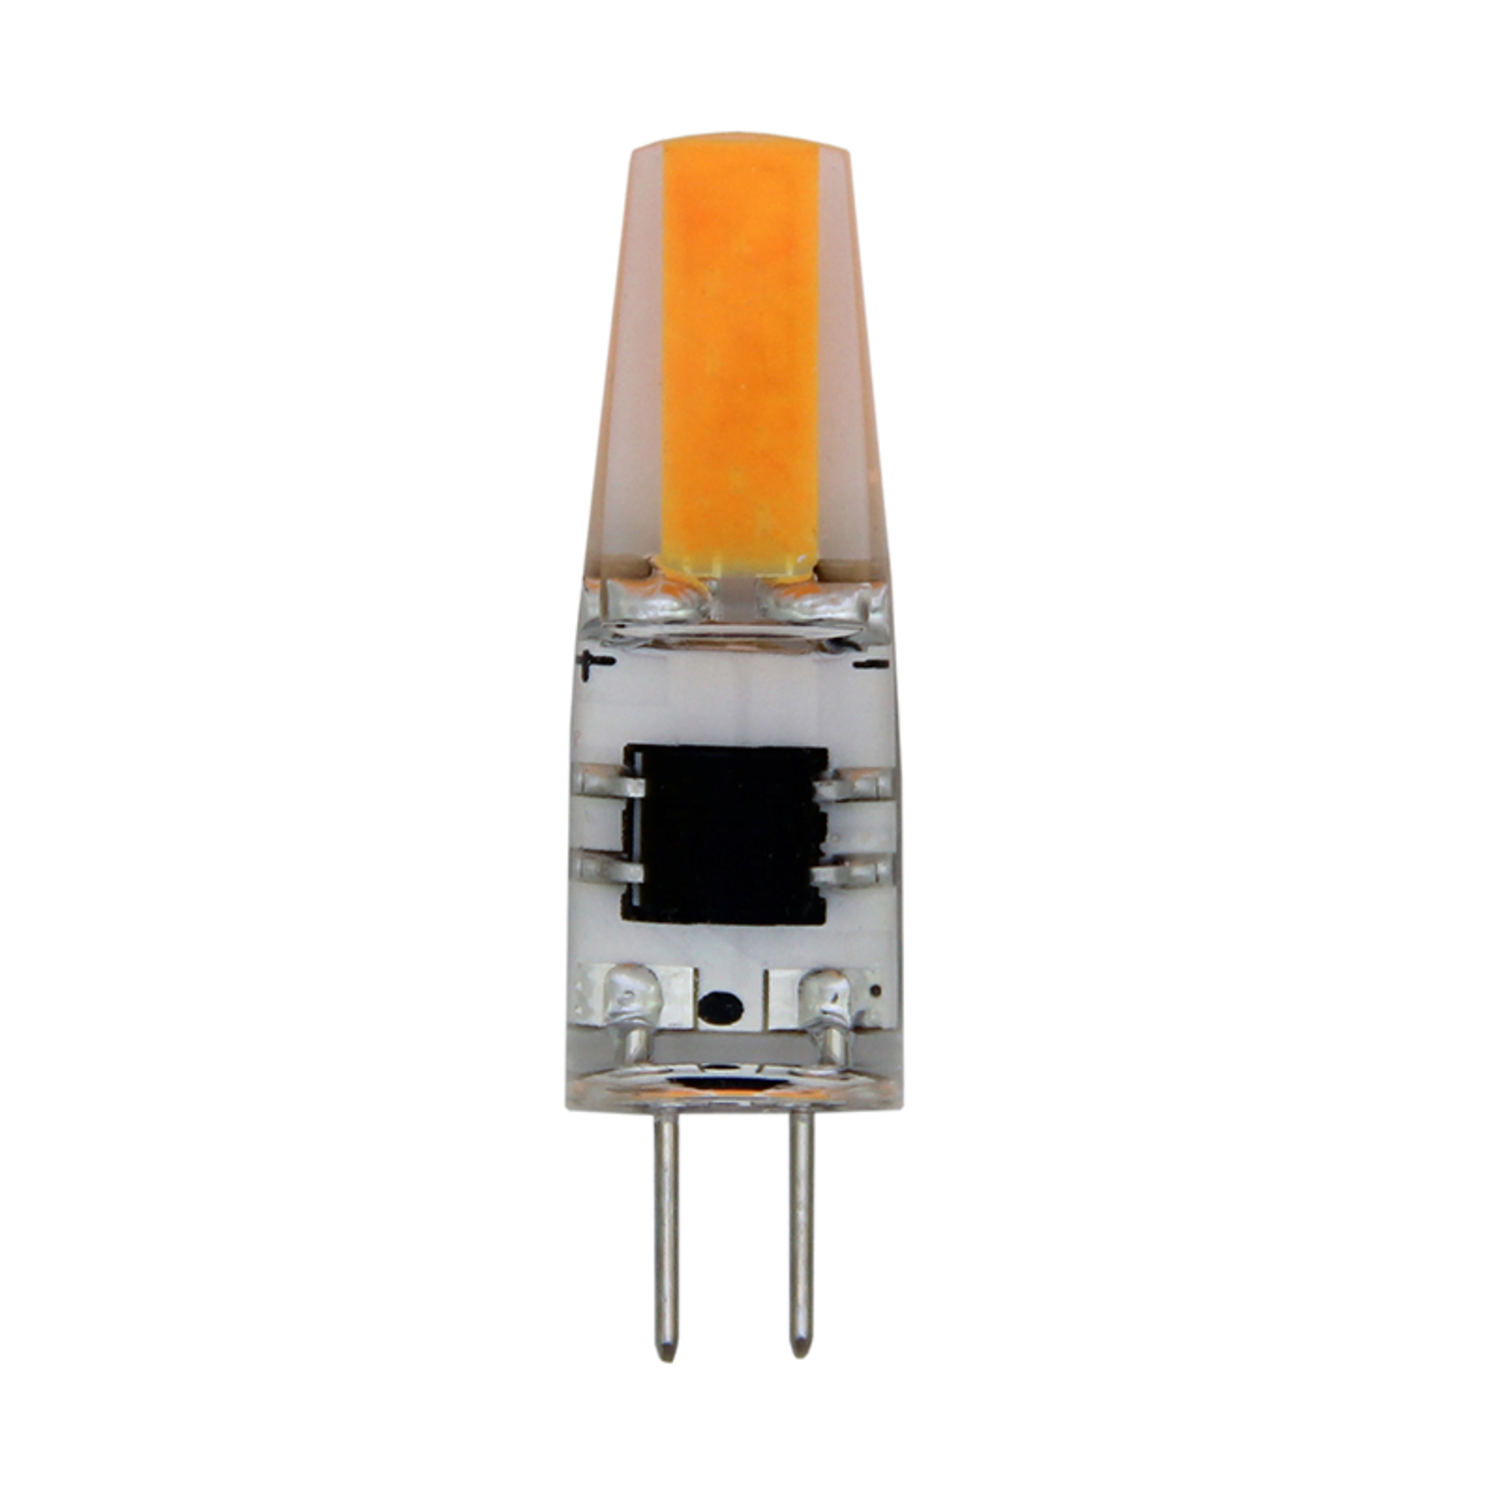 Schep Lang Productiviteit LED G4 Dimbaar - 2W vervangt 25W - 2700K warm wit licht - 10x36mm -  Ledlichtdiscounter.nl